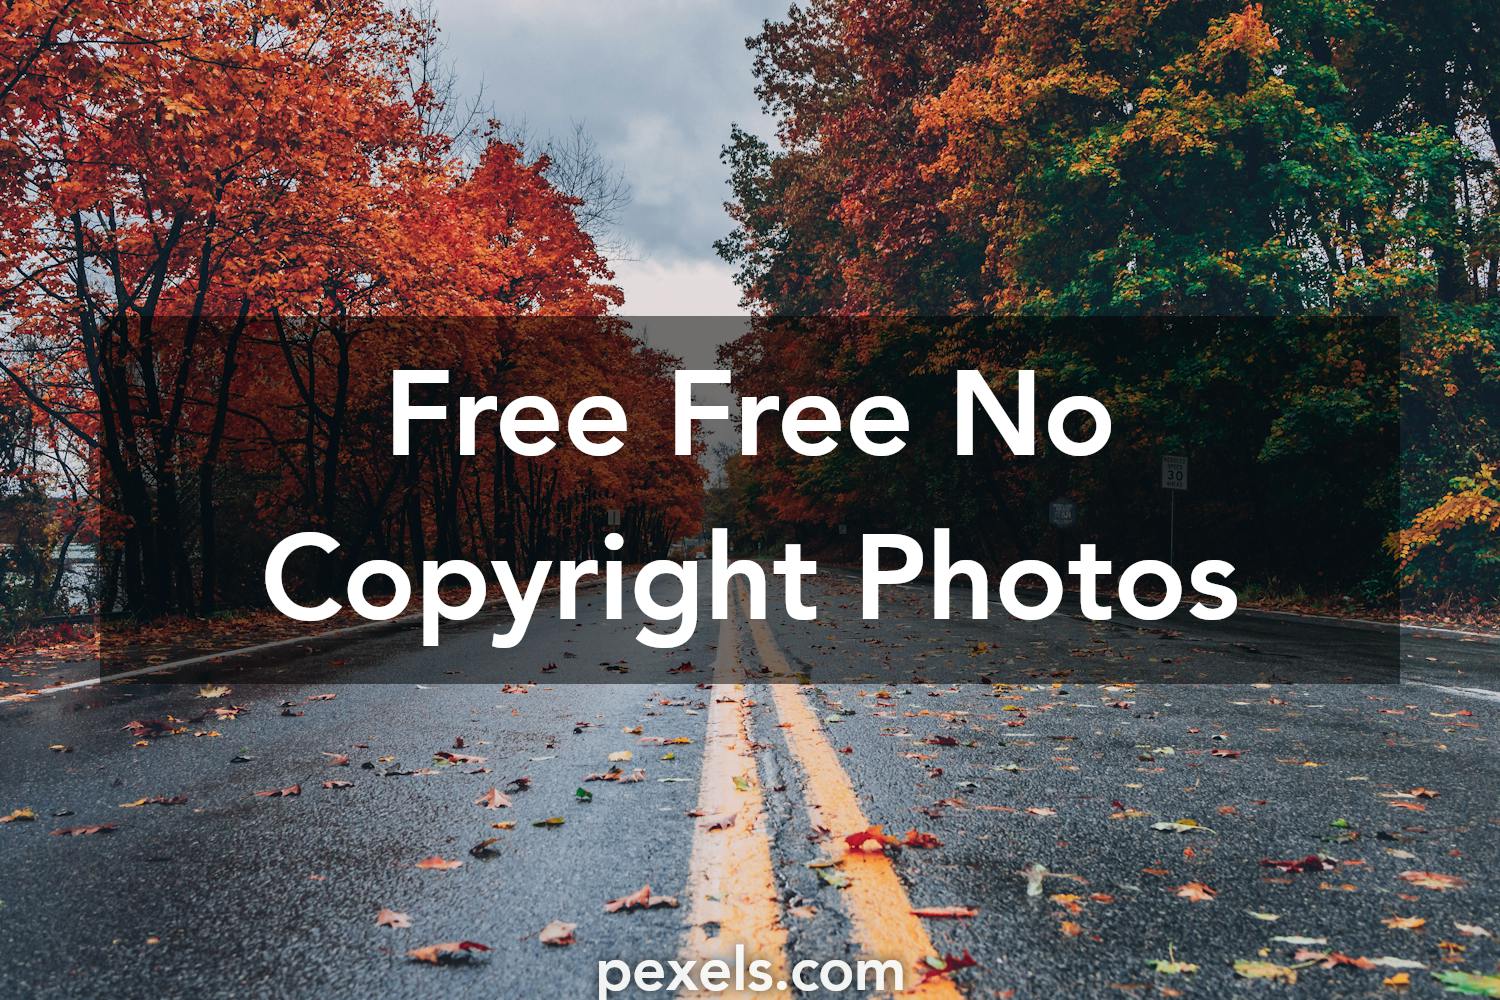 250 Interesting Free No  Copyright  Photos  Pexels  Free 